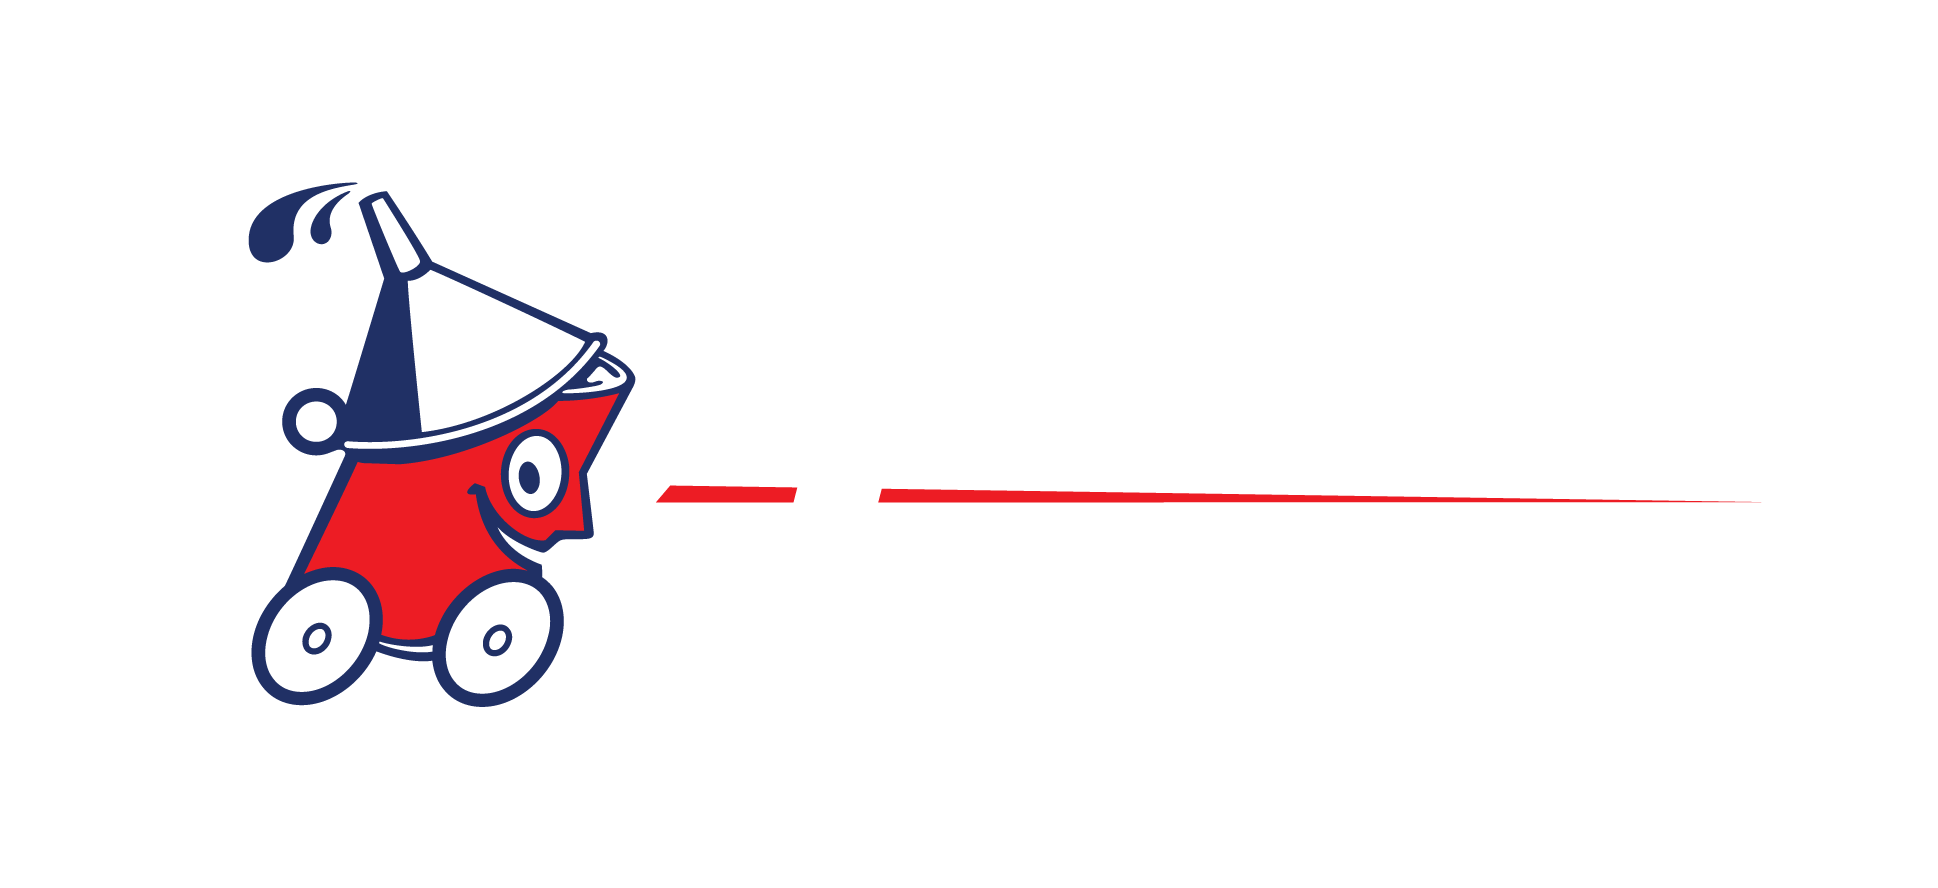 SpeeDee Oil Change & Auto Service�